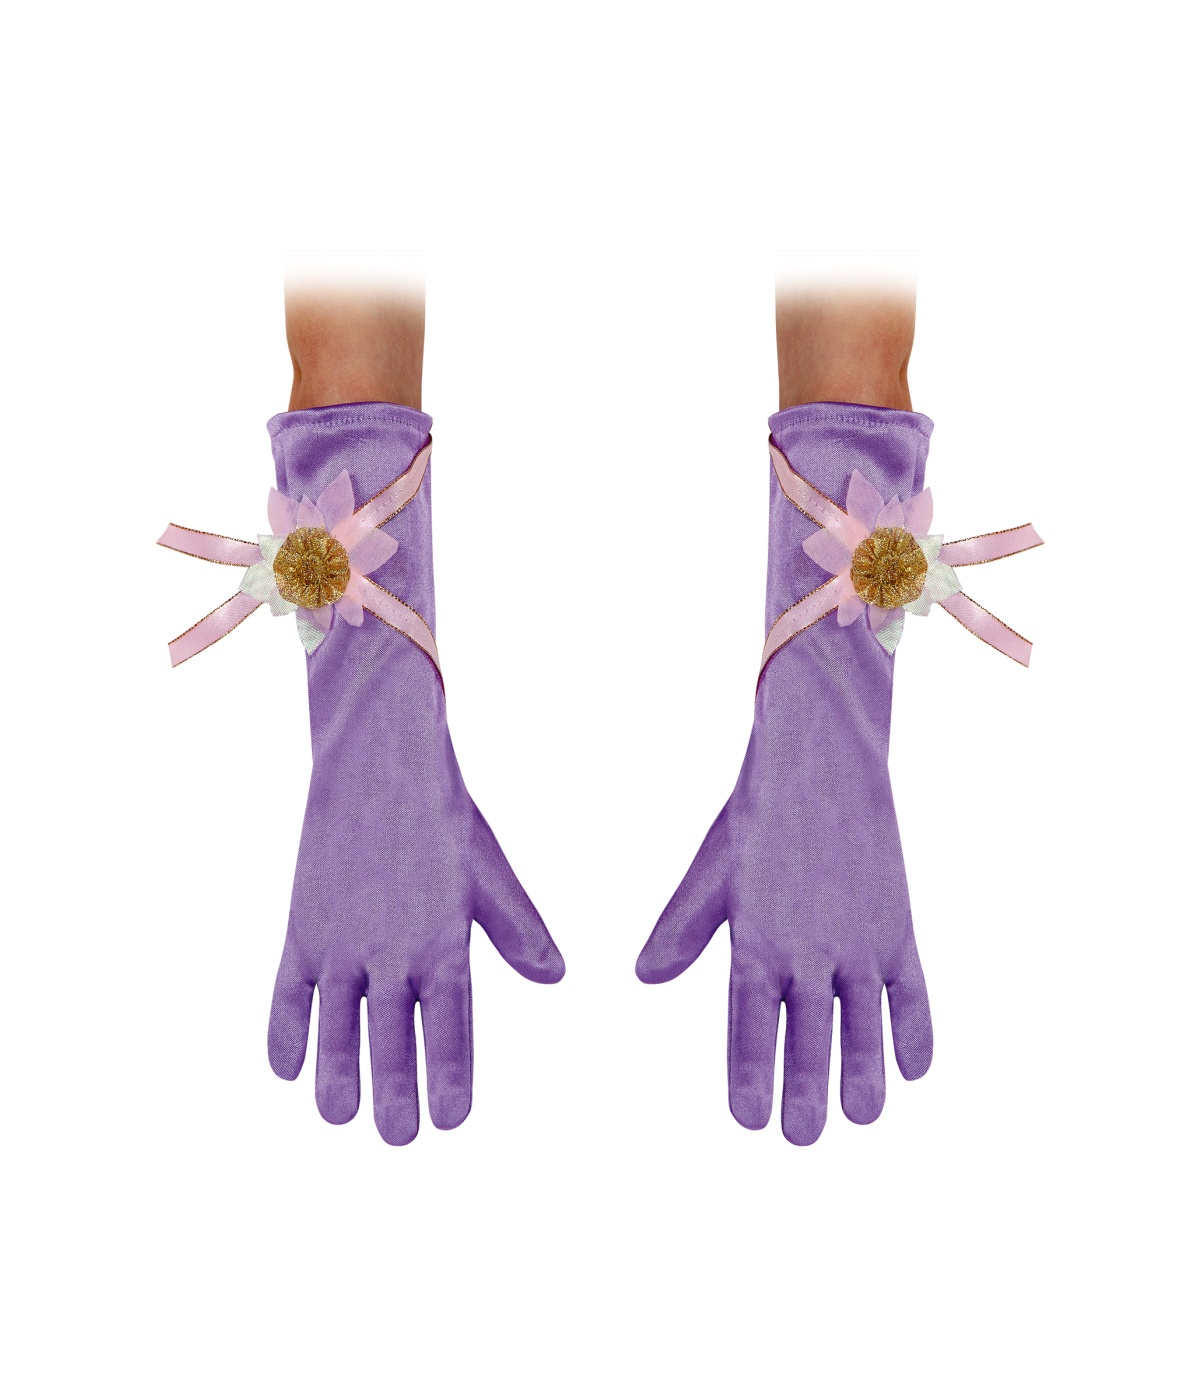  Princess Rapunzel Baby Gloves